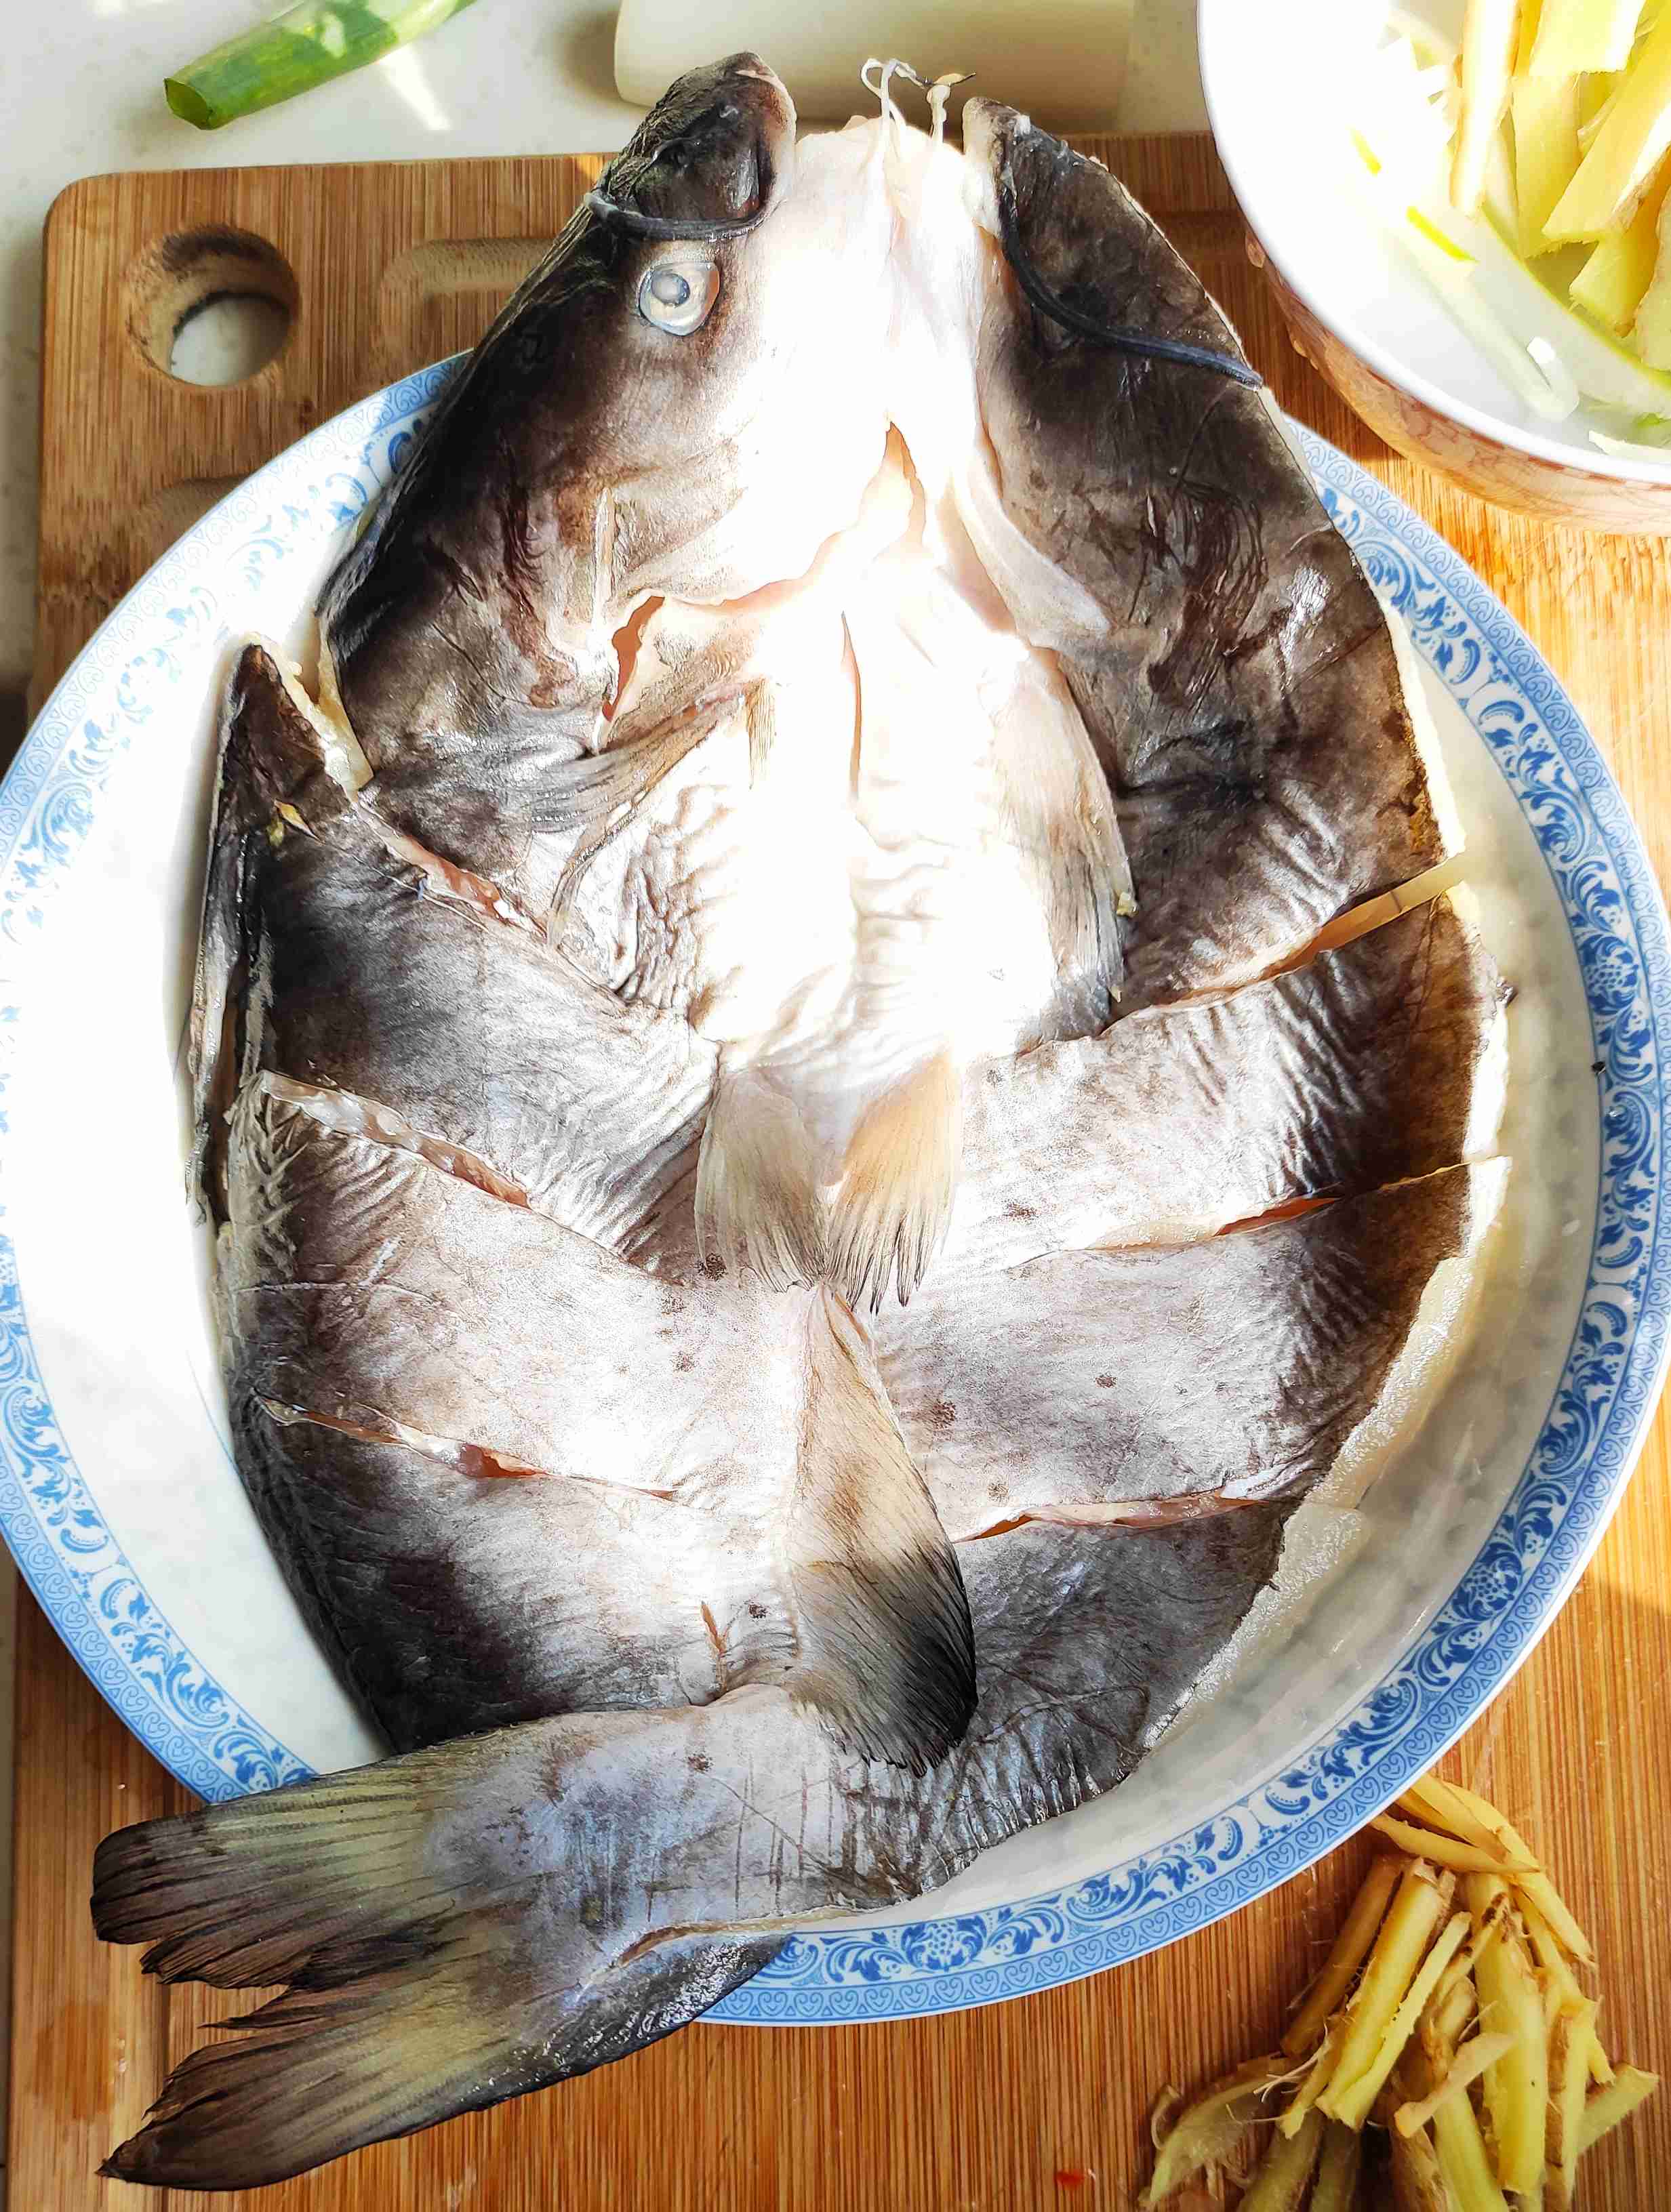 Steamed Catfish recipe